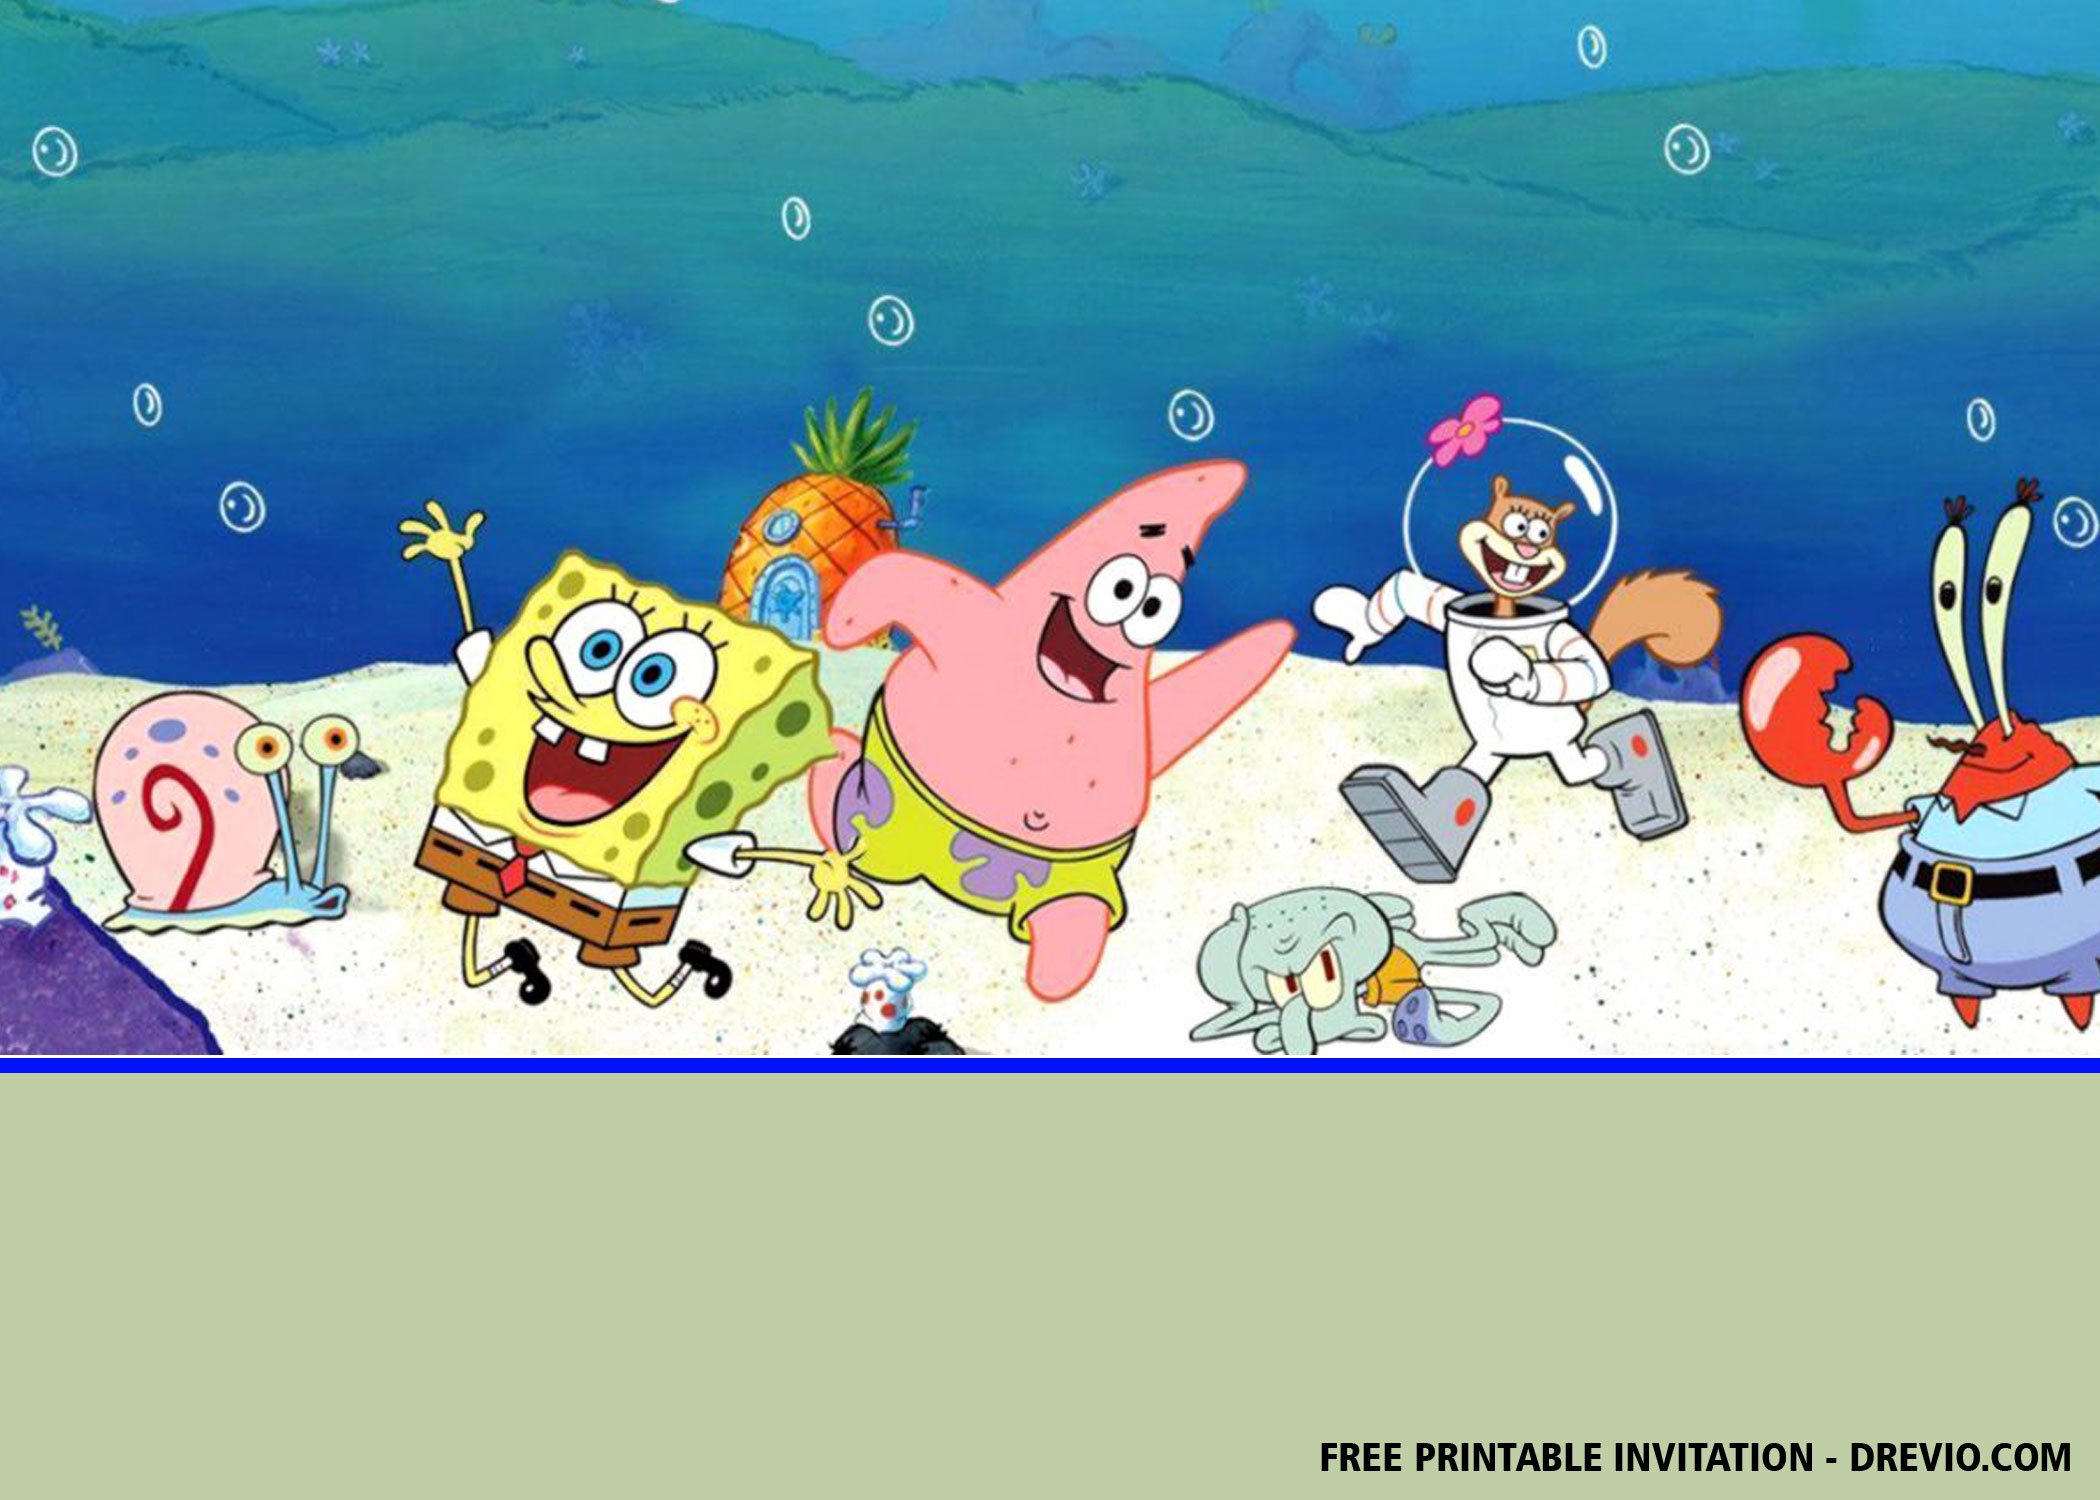 Spongebob Party Invitation Templates